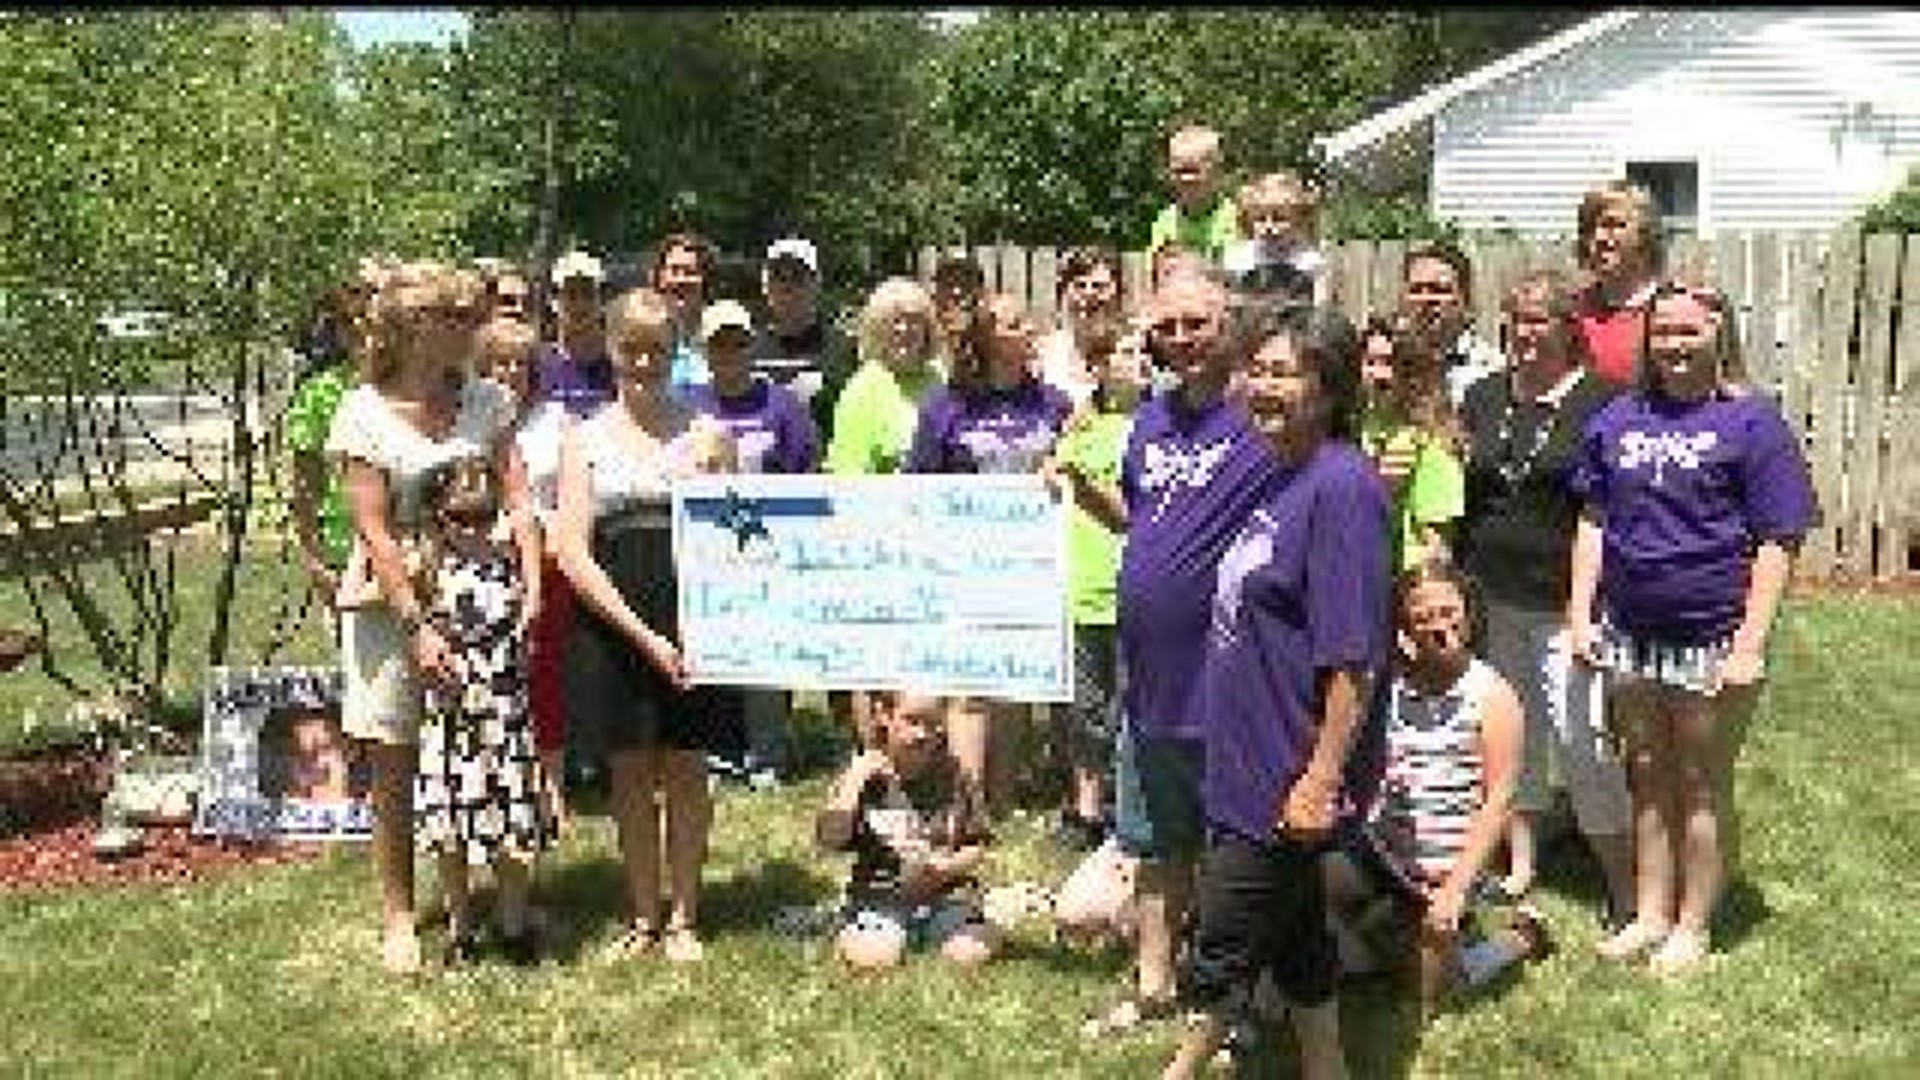 Quad City family donates to Make-A-Wish